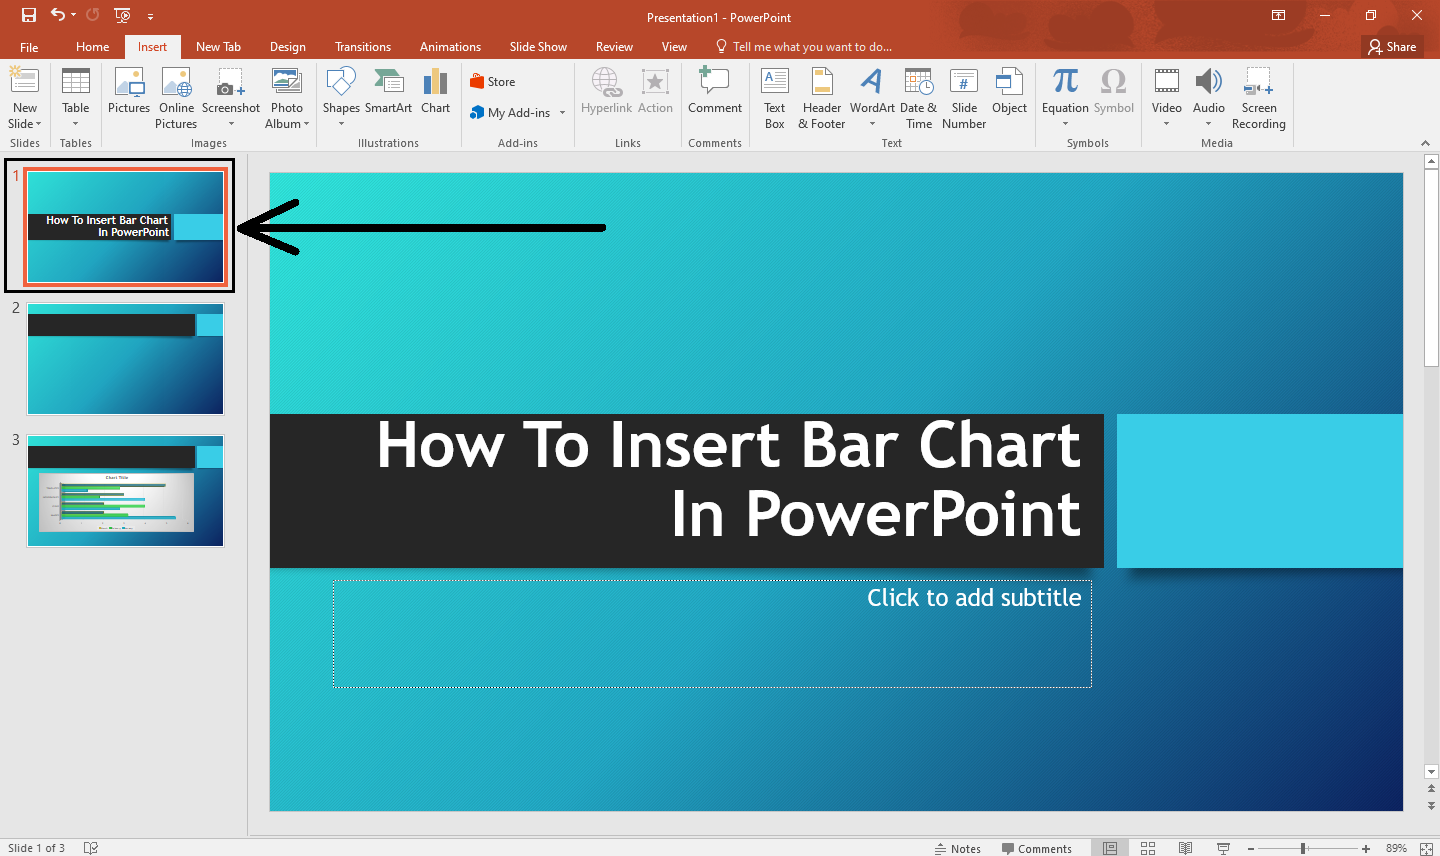 Open a PowerPoint presentation.